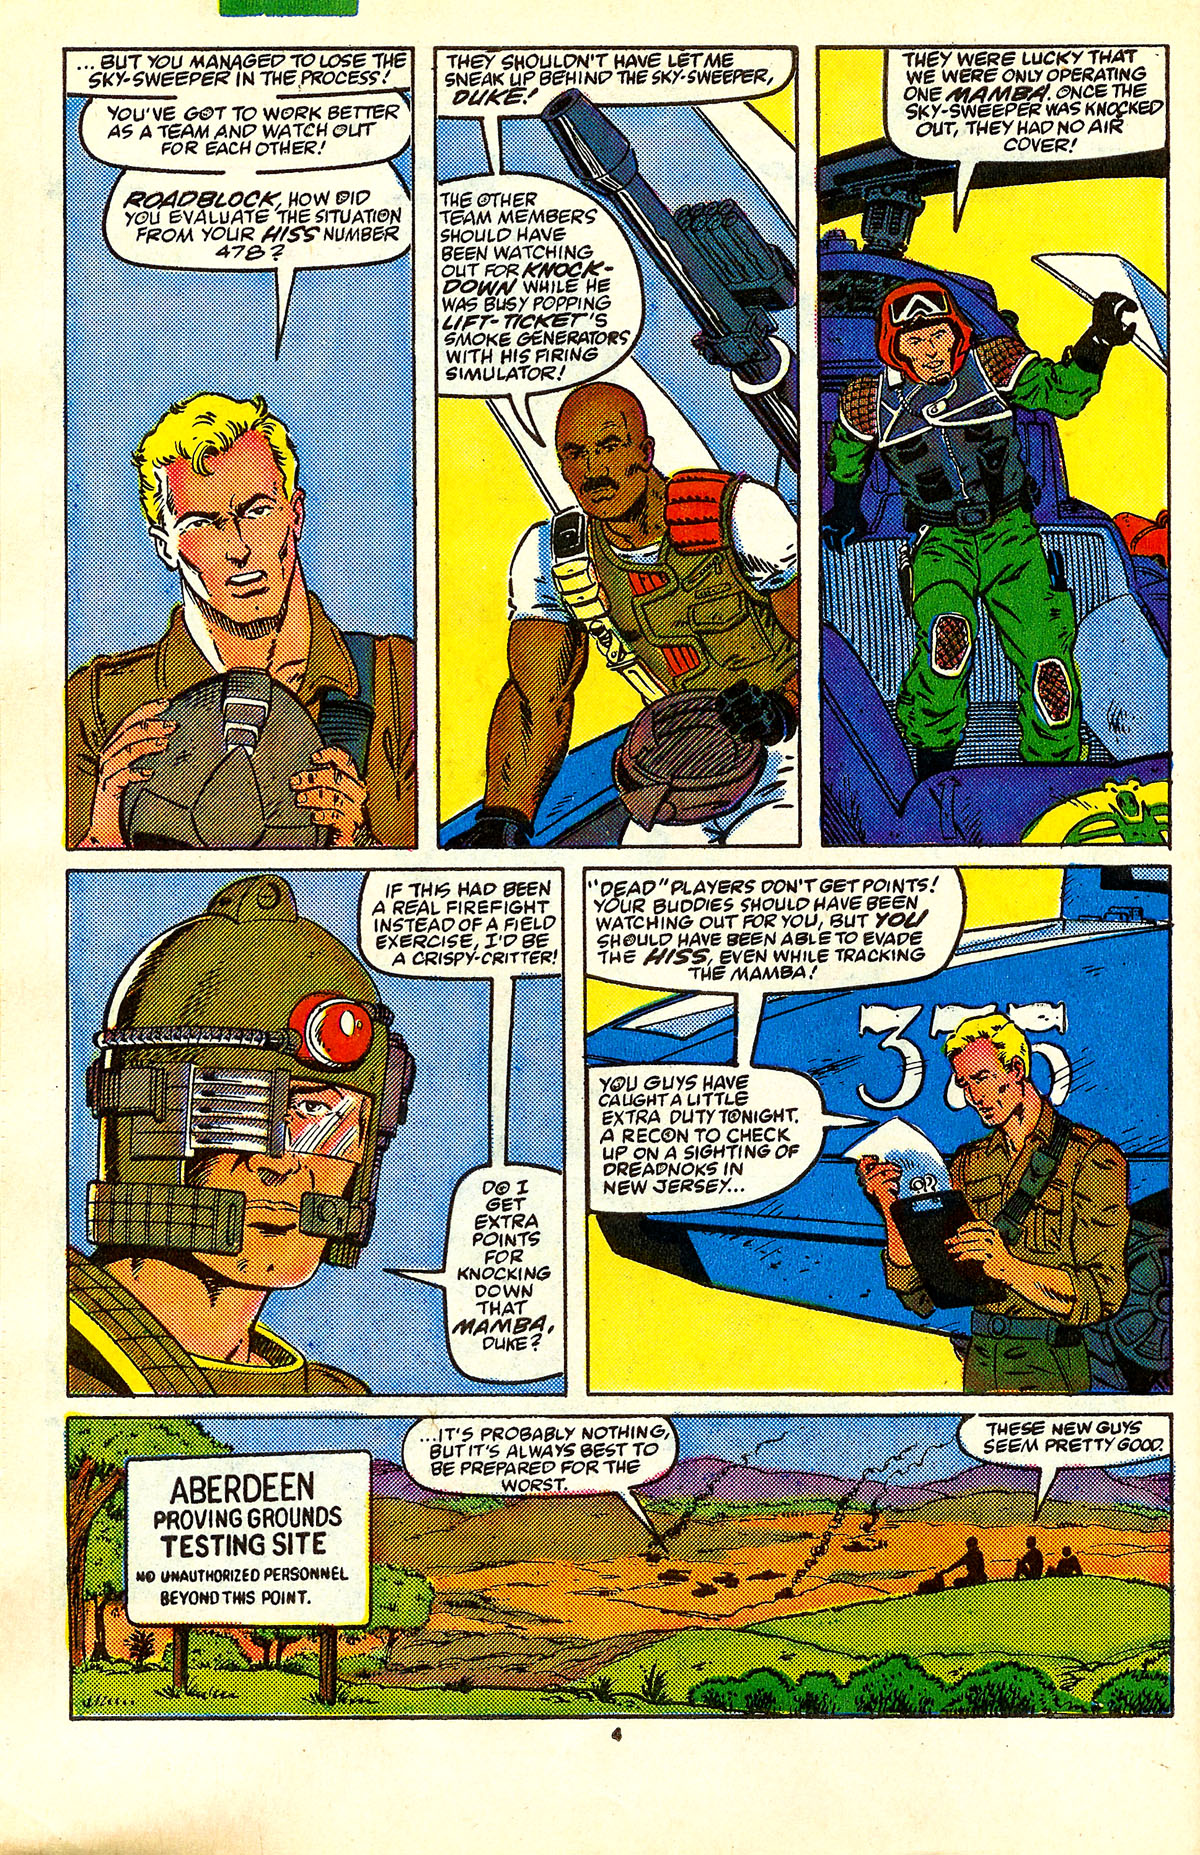 G.I. Joe: A Real American Hero 81 Page 4